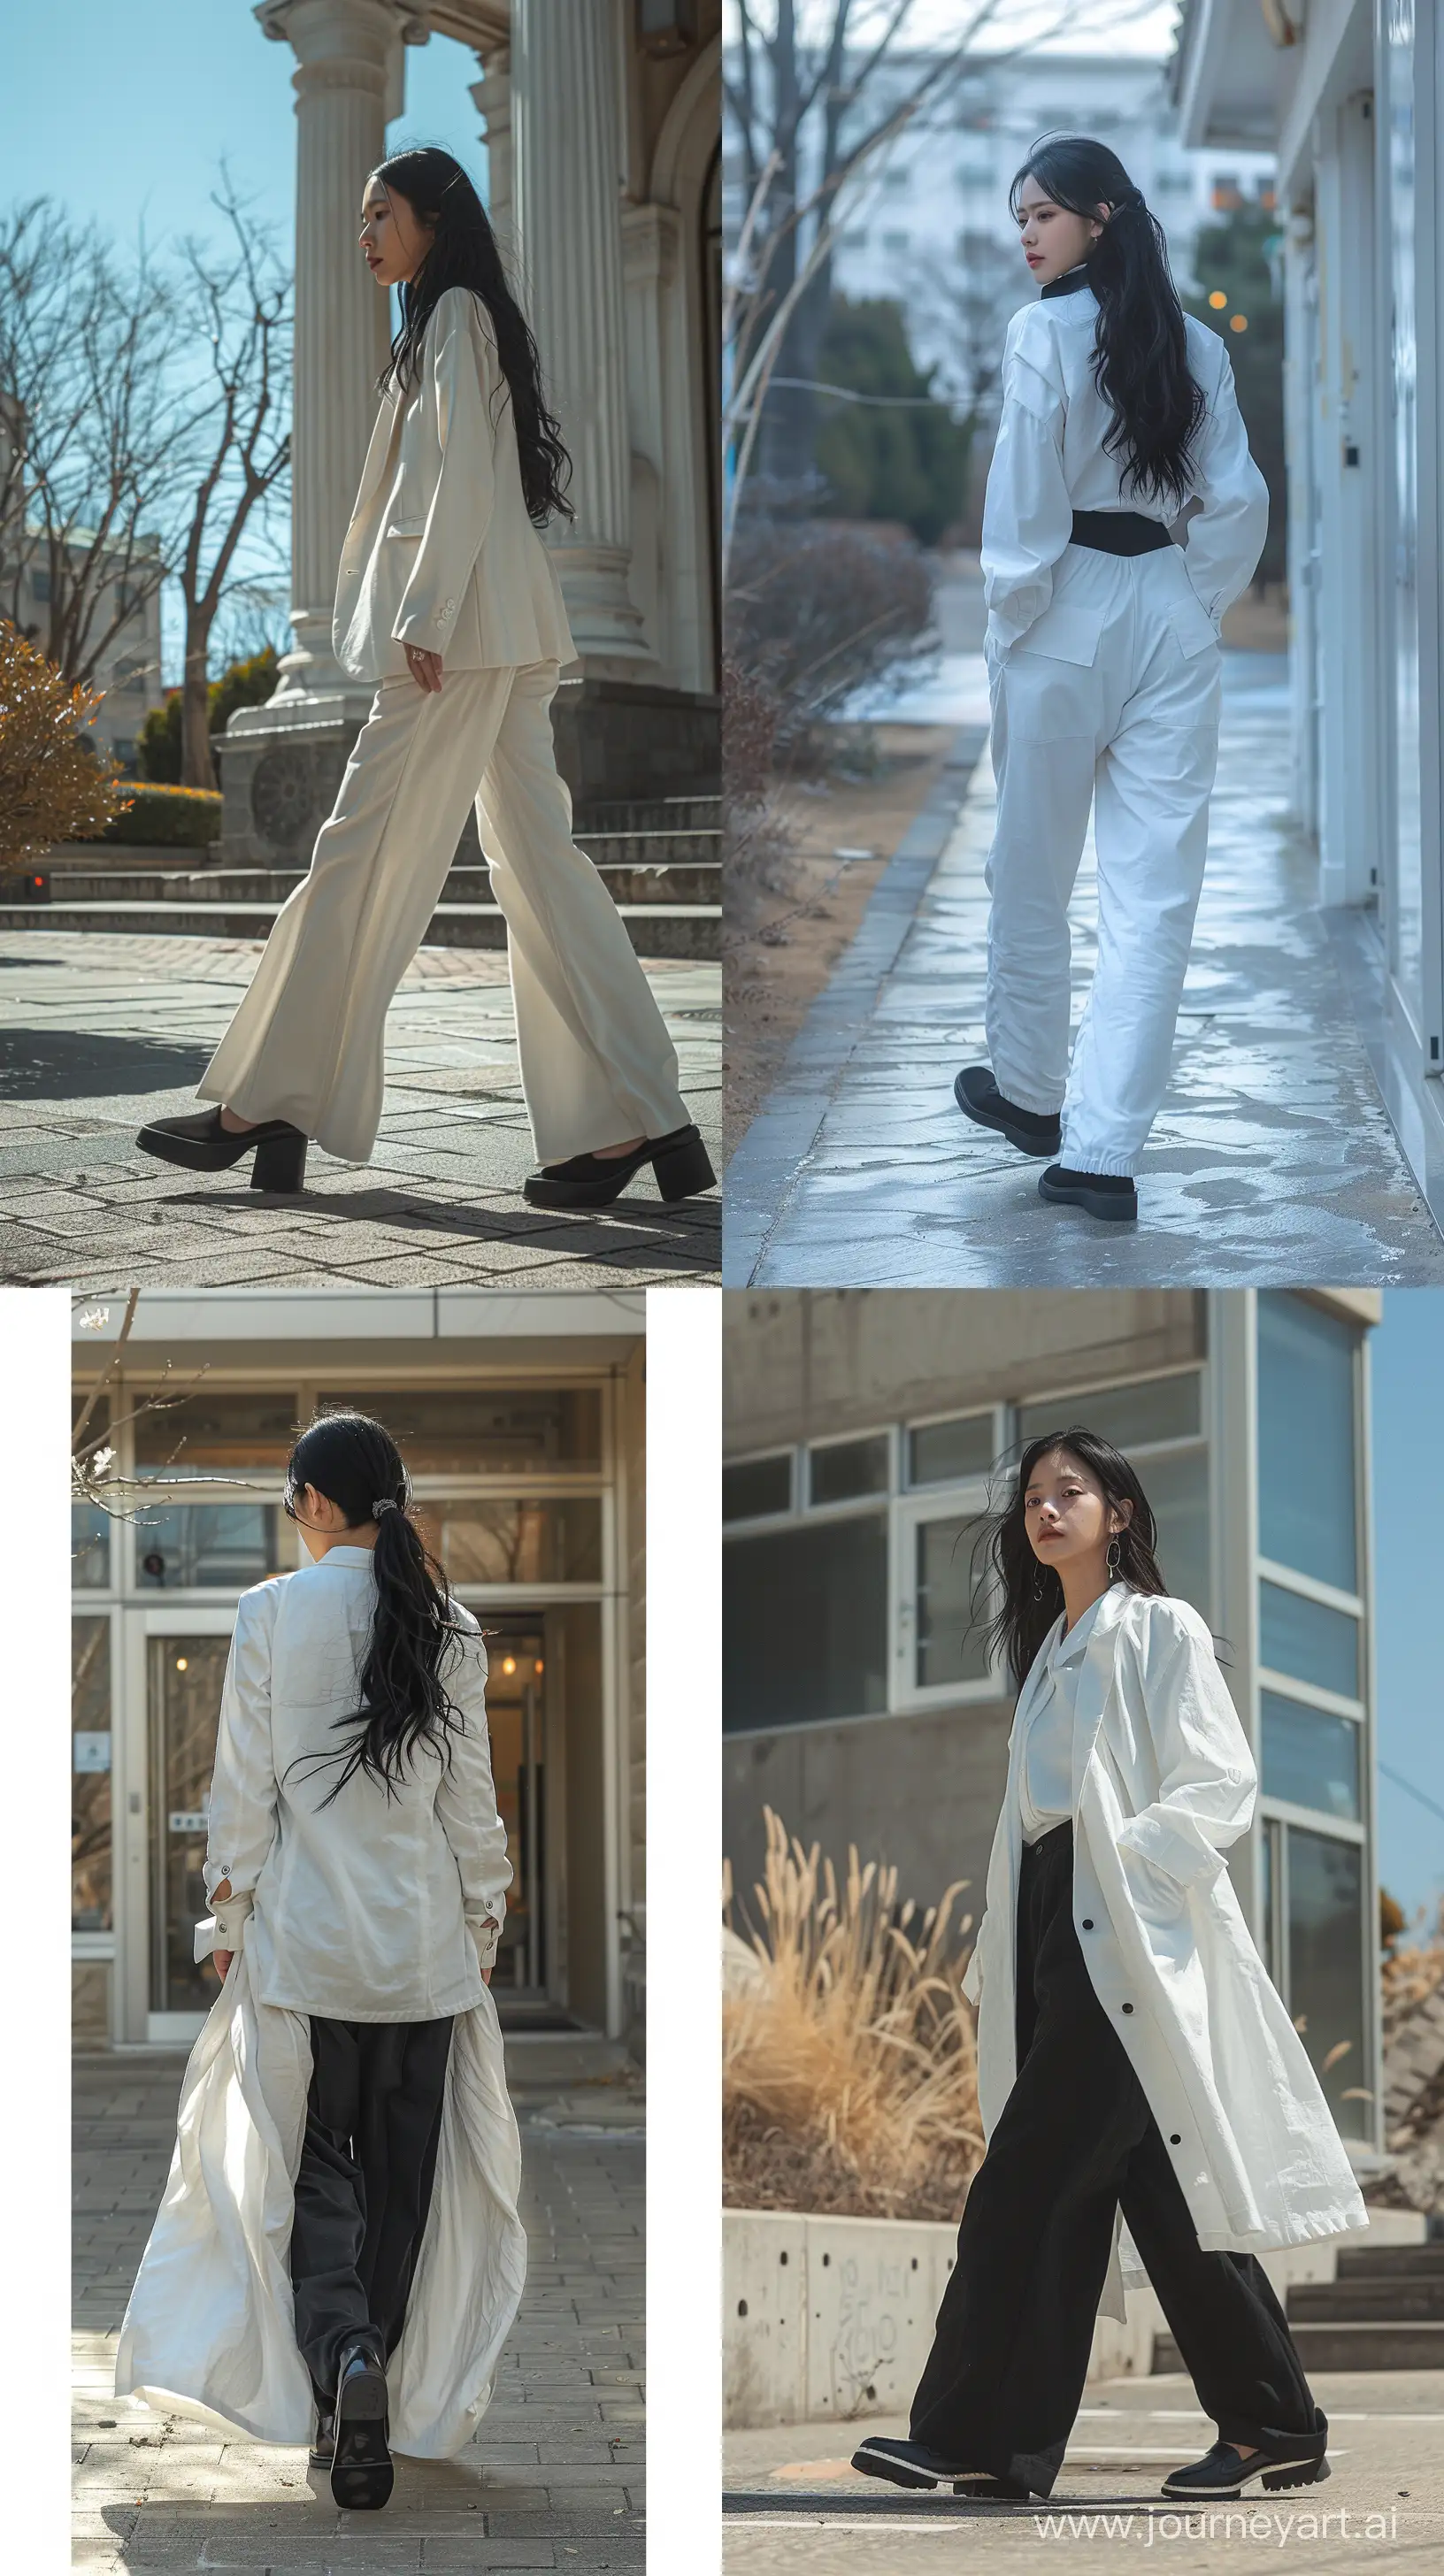 Stylish-Korean-Woman-Walking-on-Campus-in-Monochrome-Ensemble